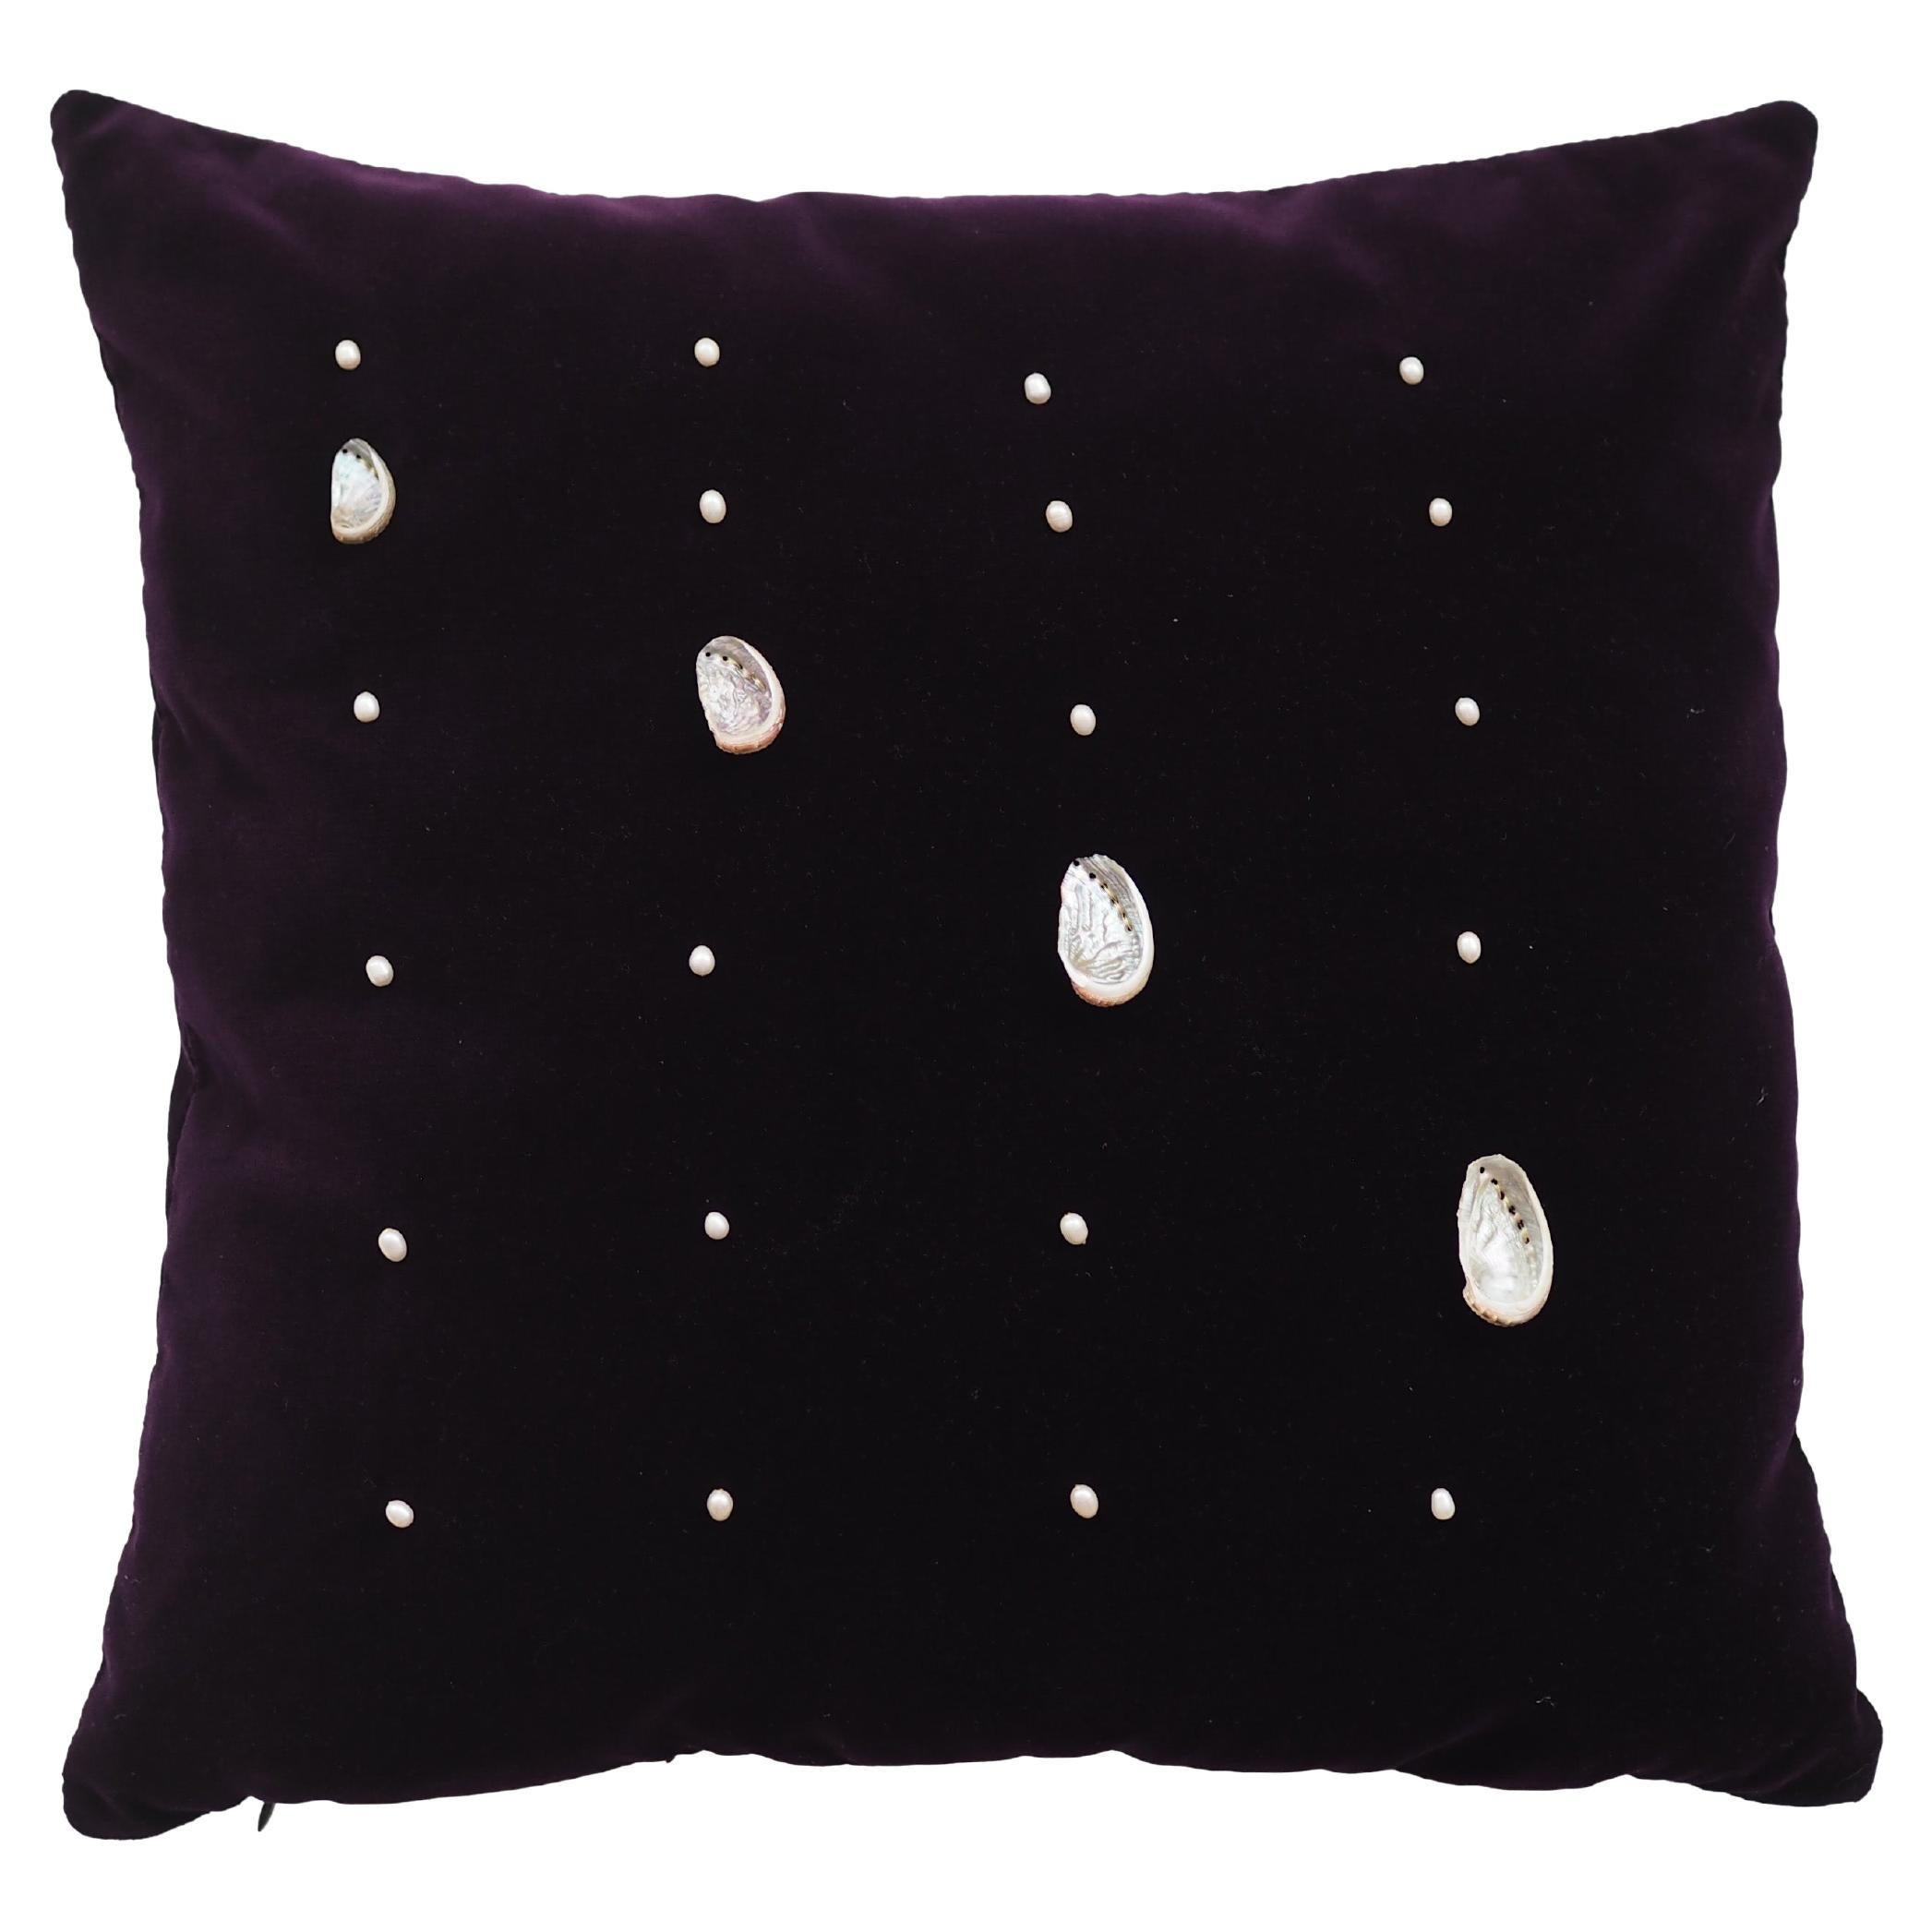 Bon Appetit 004 Decorative Cushion Culto Ponsoda 21st century desingn For Sale